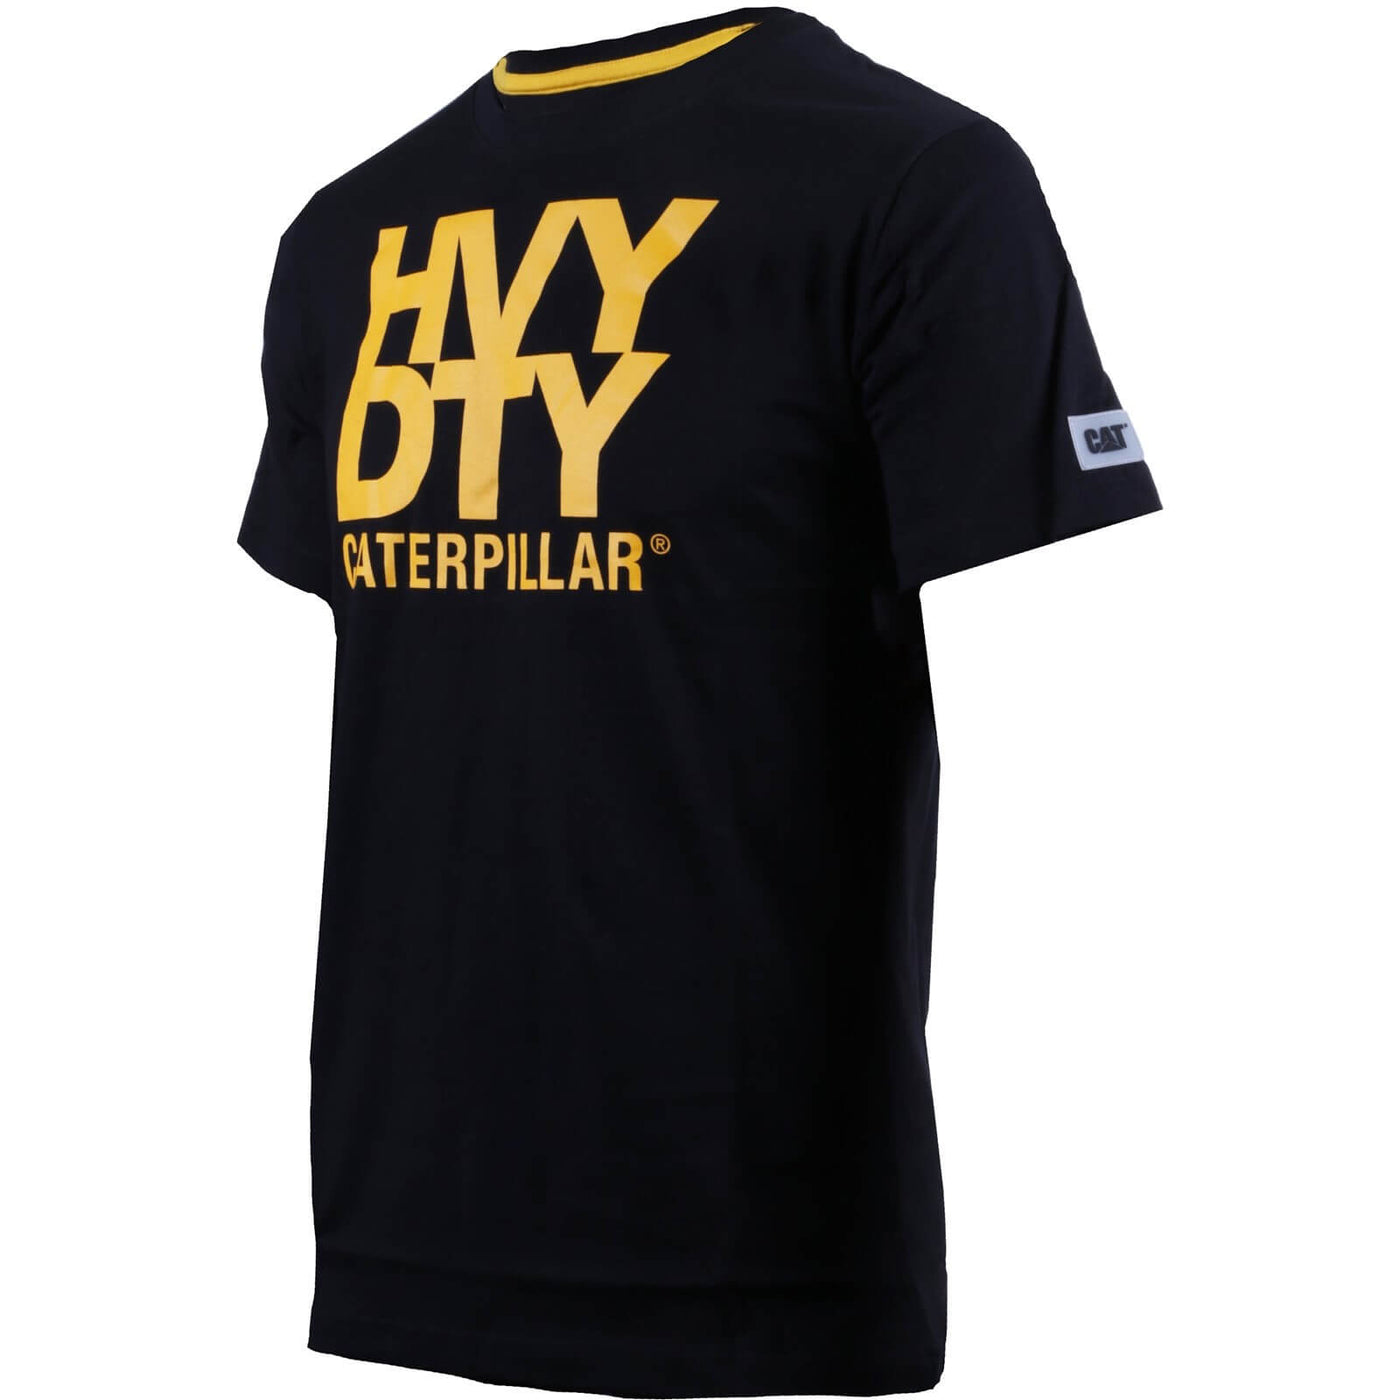 Caterpillar Heavy Duty Tee Shirt Black 6#colour_black